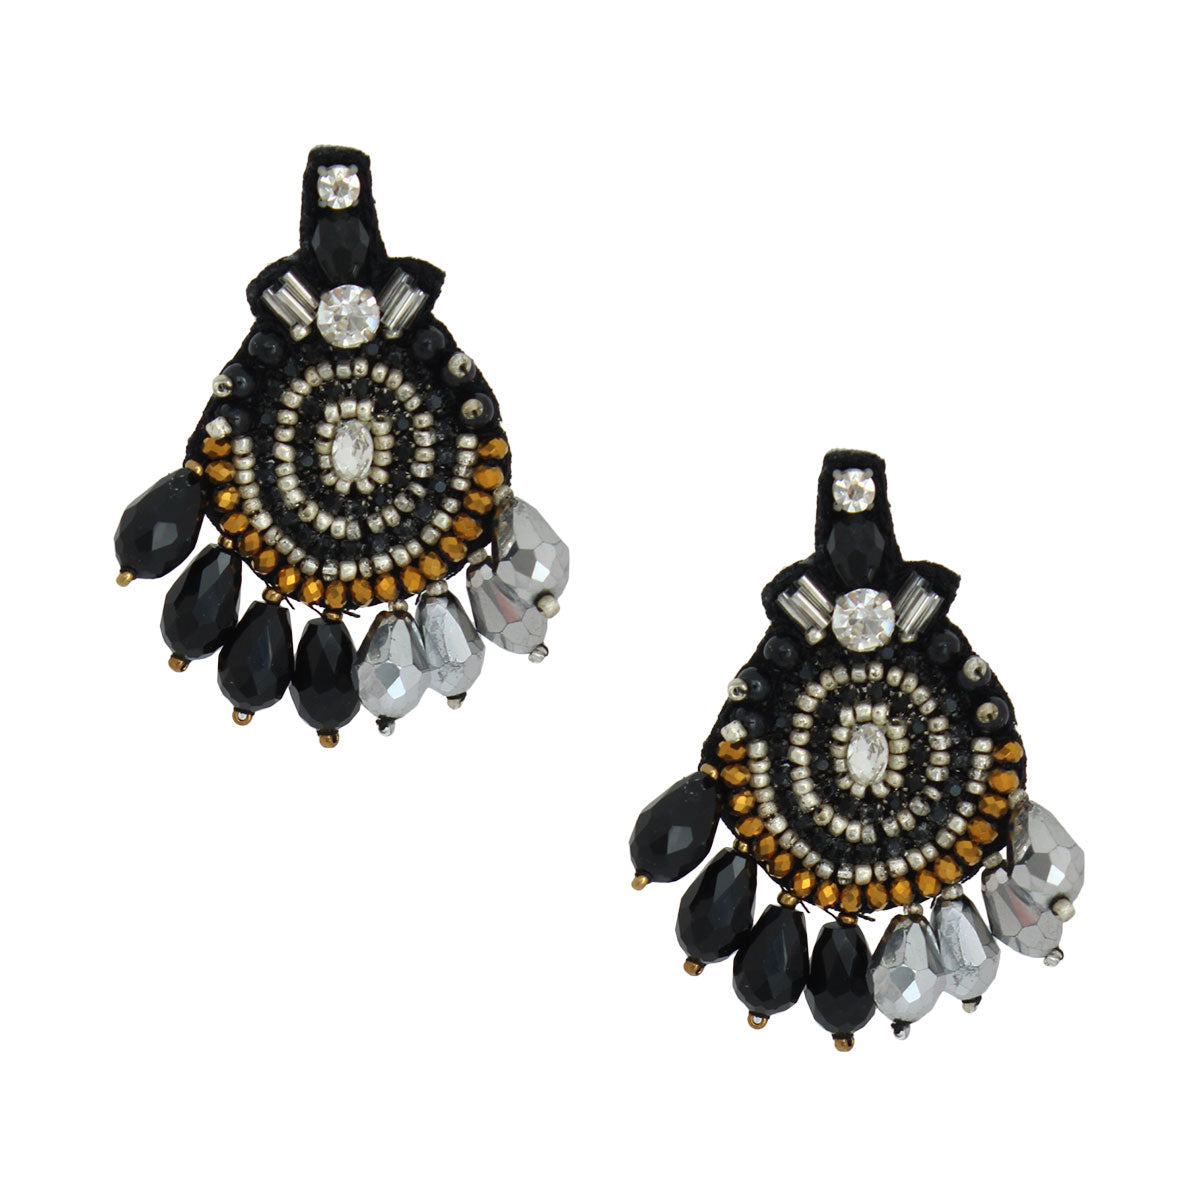 Embroidered Black Teardrop Bead Earrings